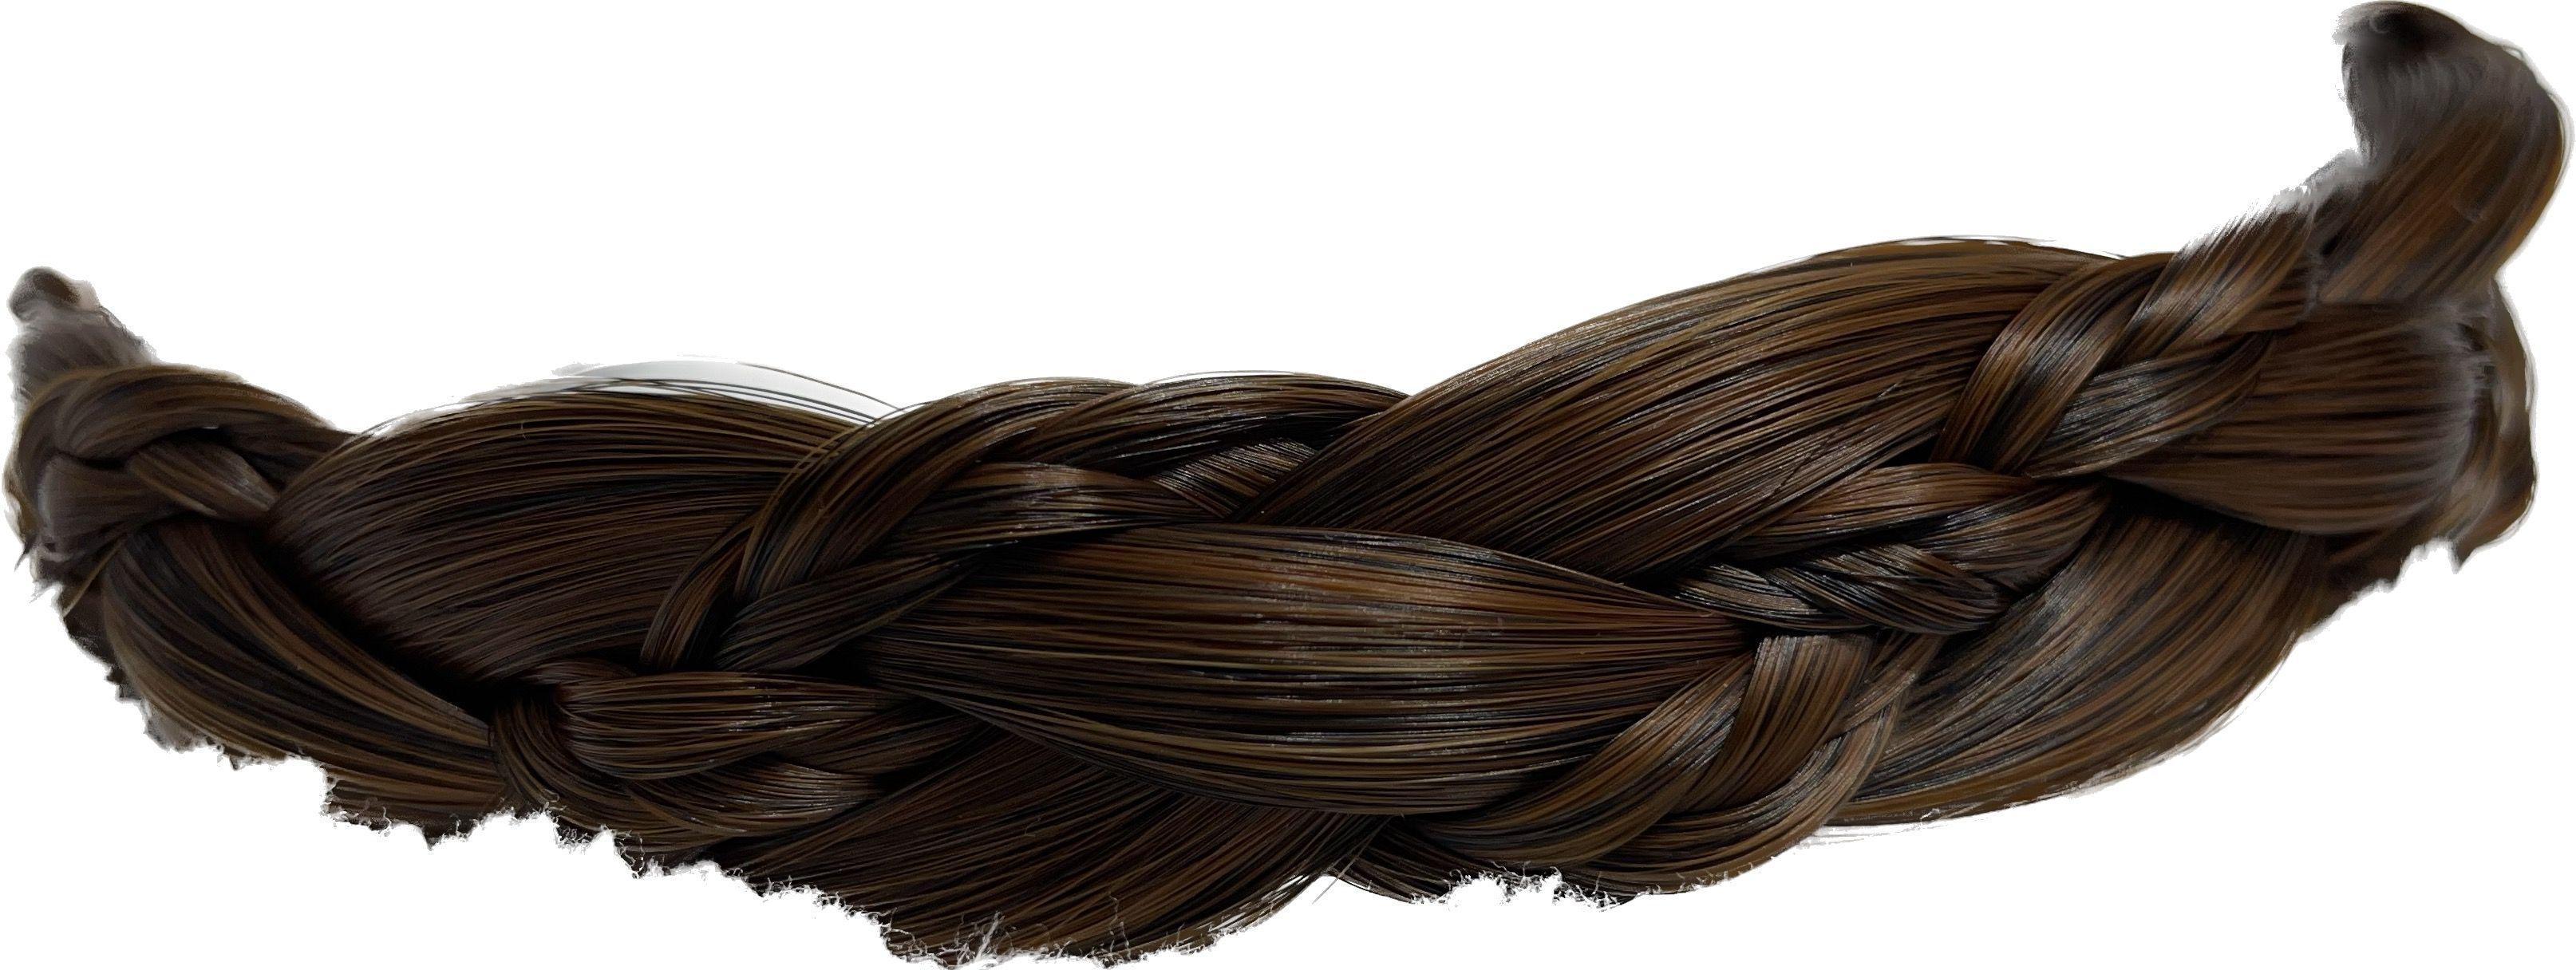 Hairband - black braided